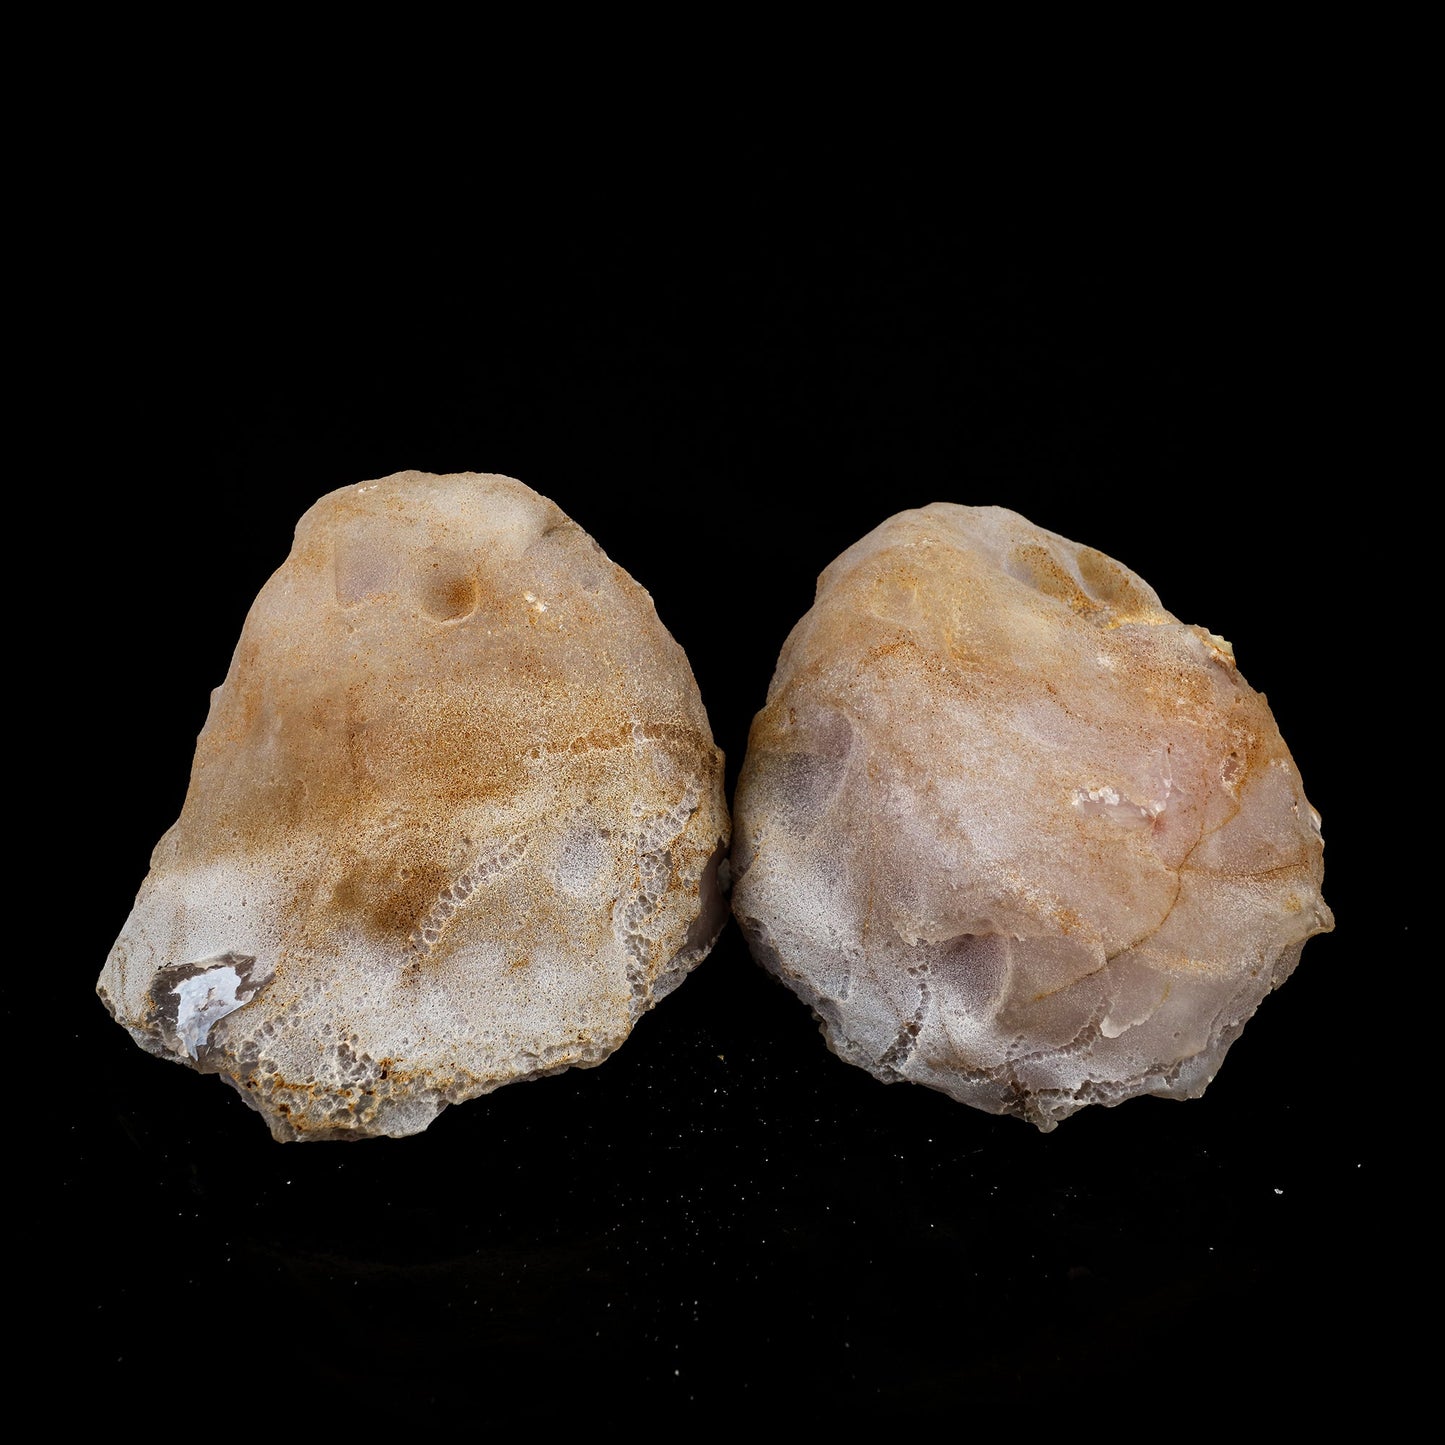 Amethyst Sparkling Crystals Geode in two Half's Natural Mineral Specimen # B 6373 Amethyst Superb Minerals 